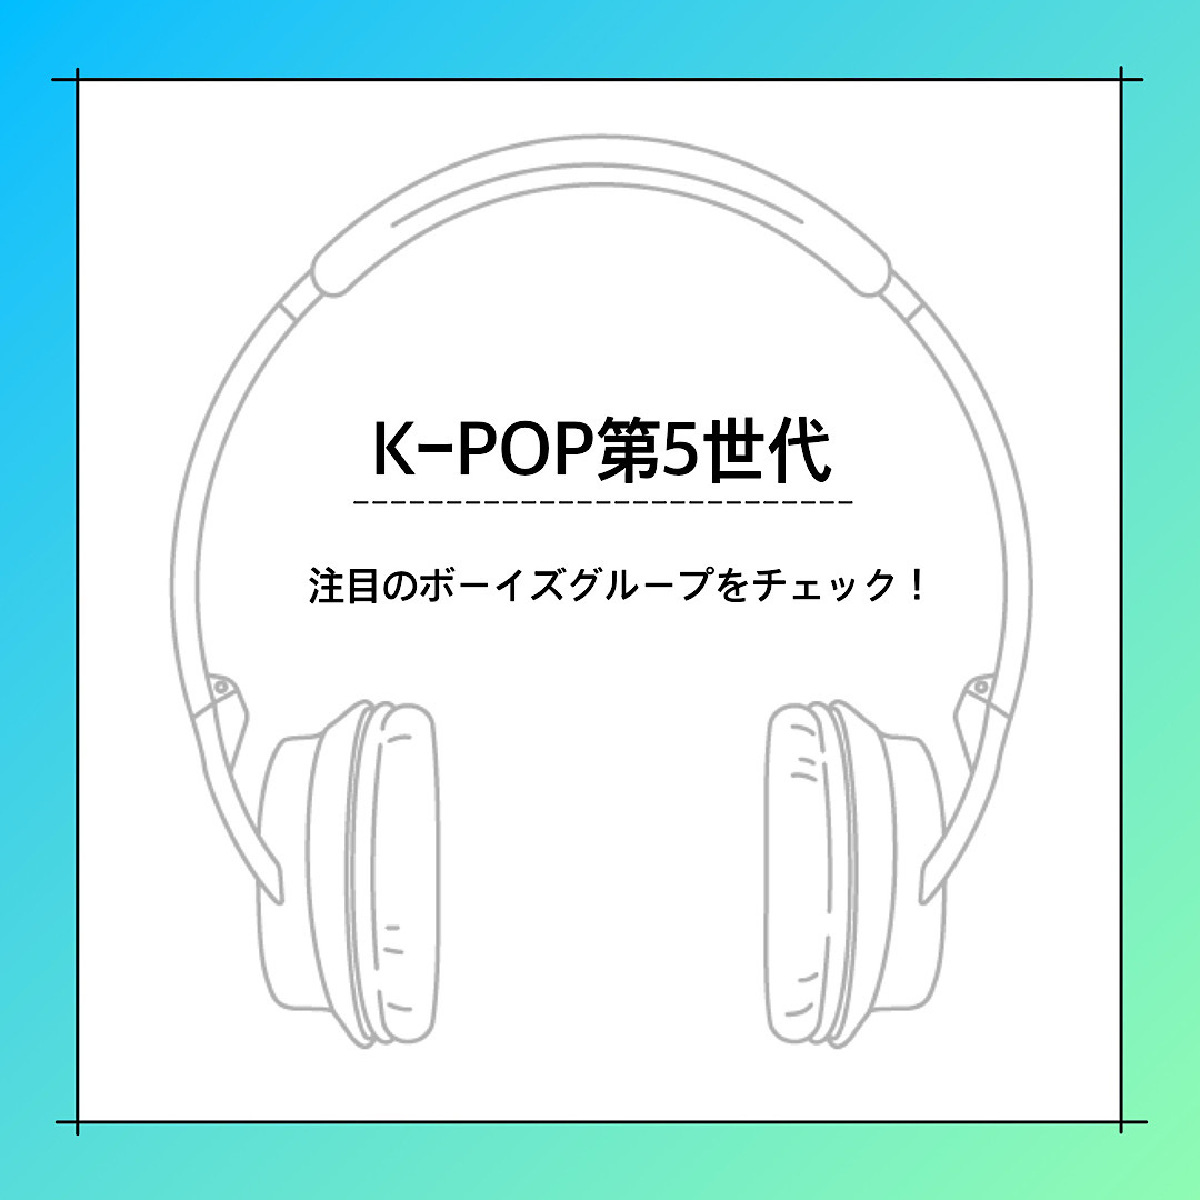 K-POP第5世代が到来！ ZB1、RIIZEら今注目すべきボーイズグループ4選【韓国カルチャー通信 #247】